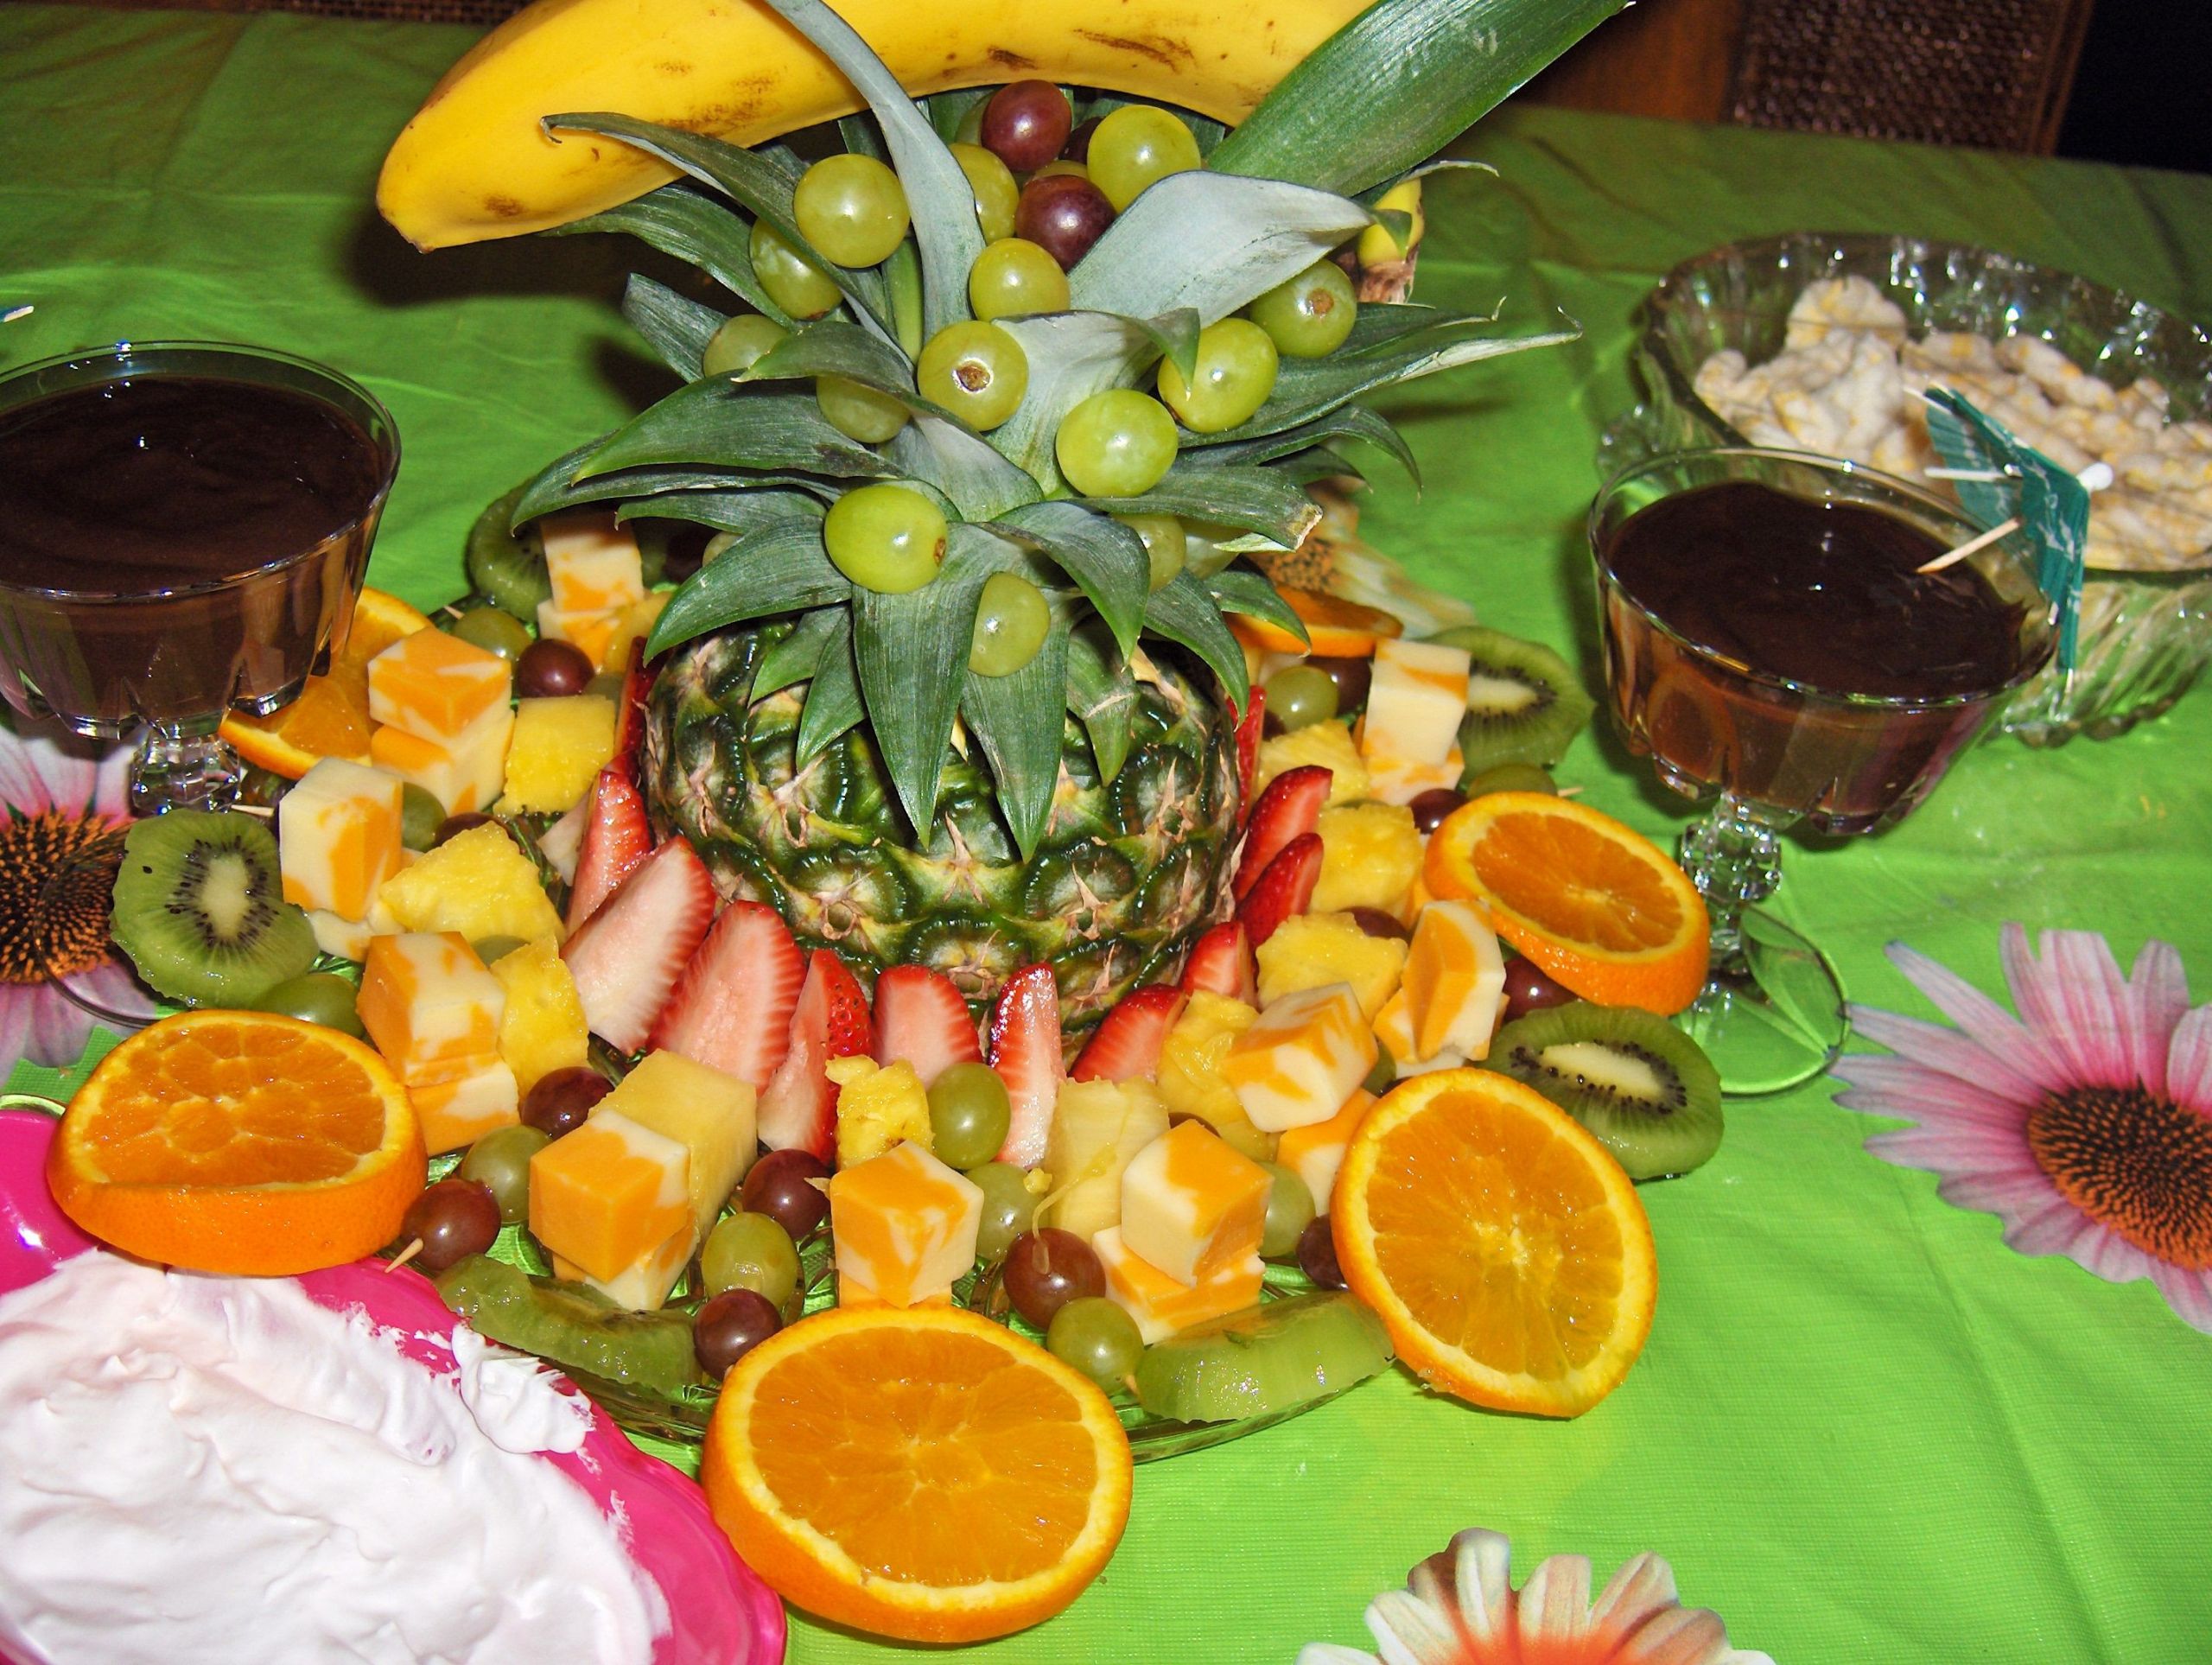 Fruit Tray Ideas For Graduation Party
 Tropical Graduation Party Fruit Platter